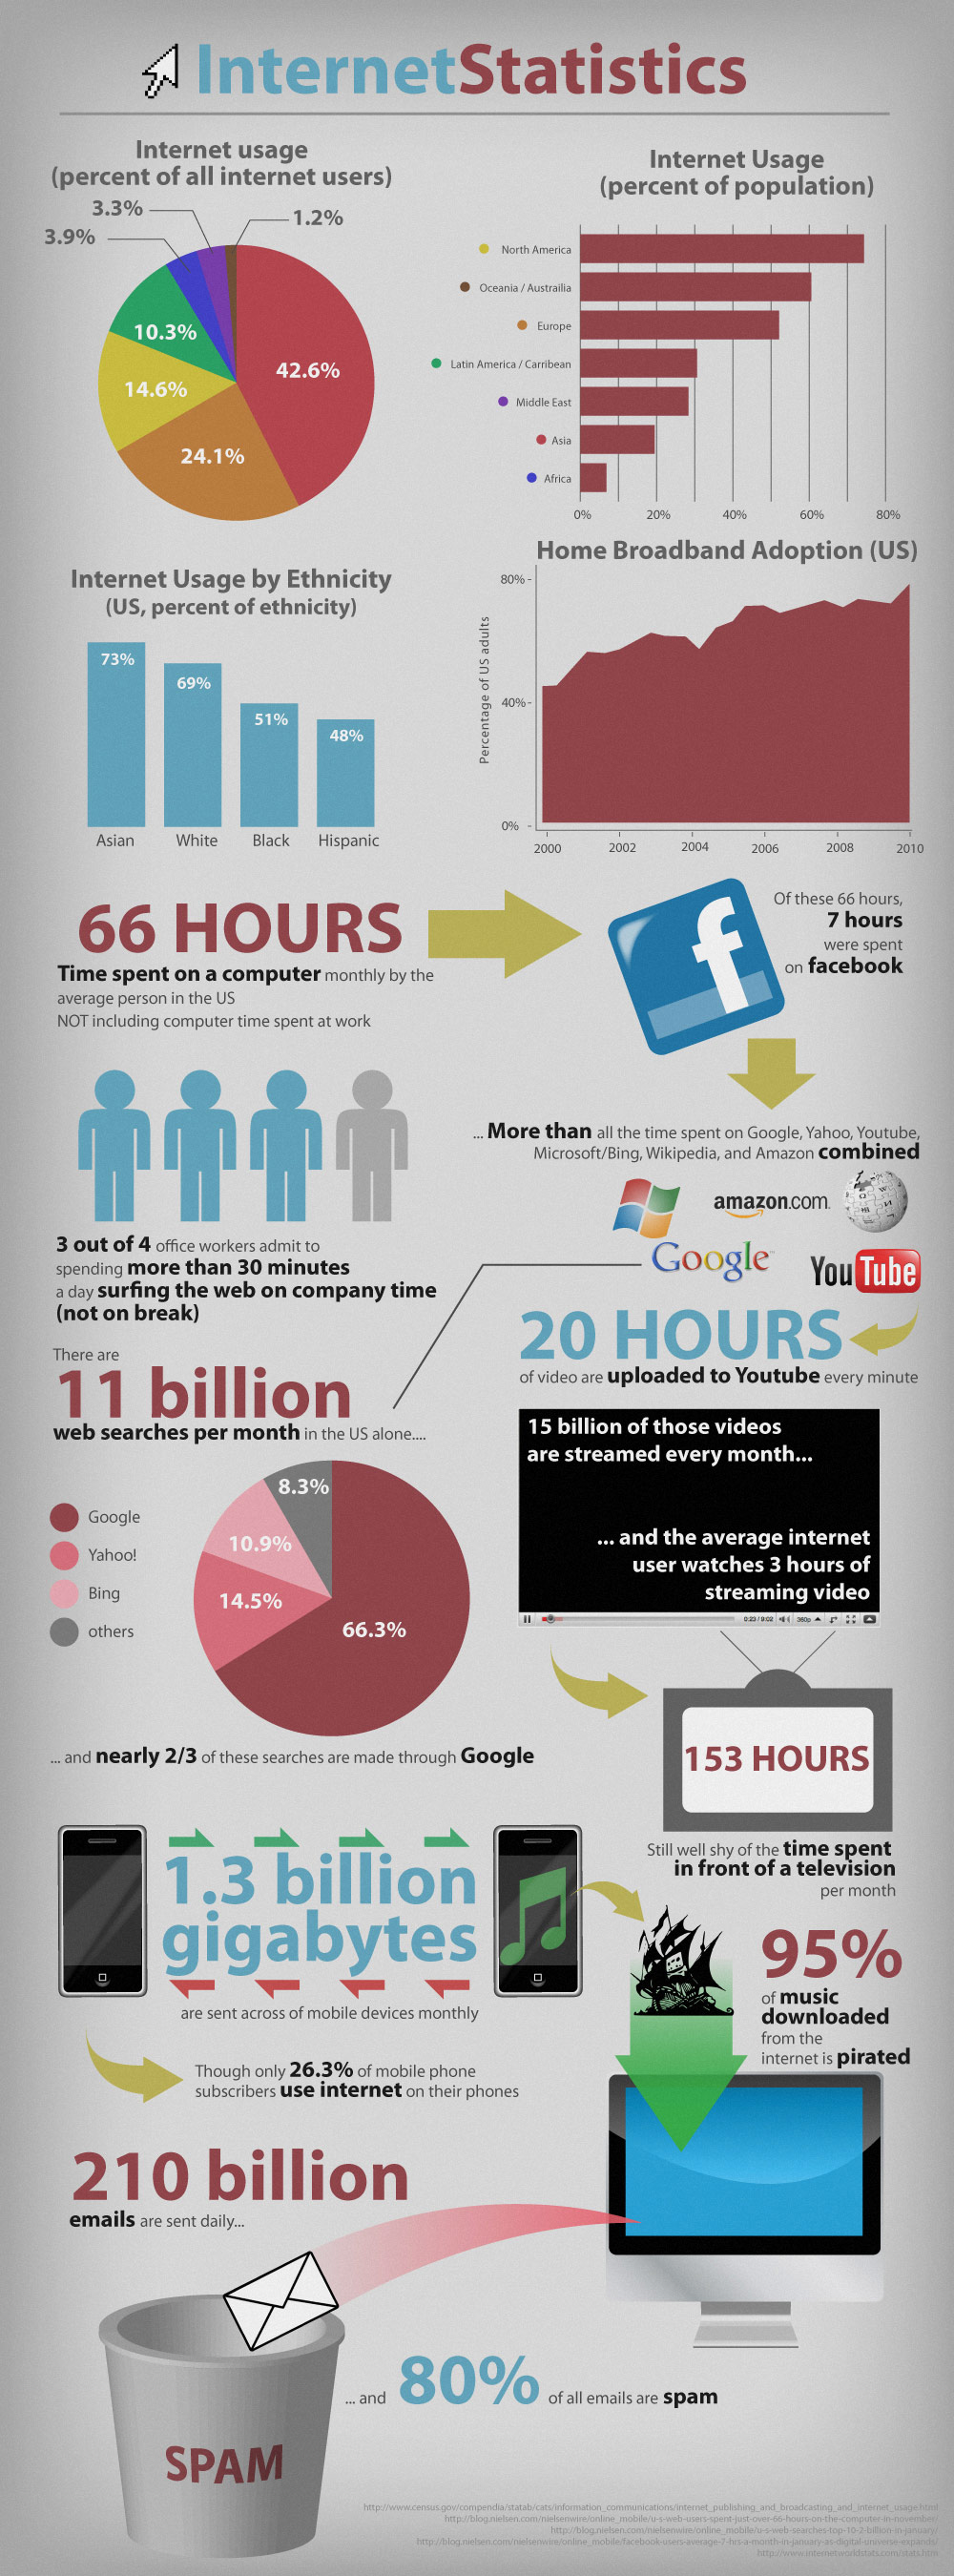 Internet Statistics, An Infographic